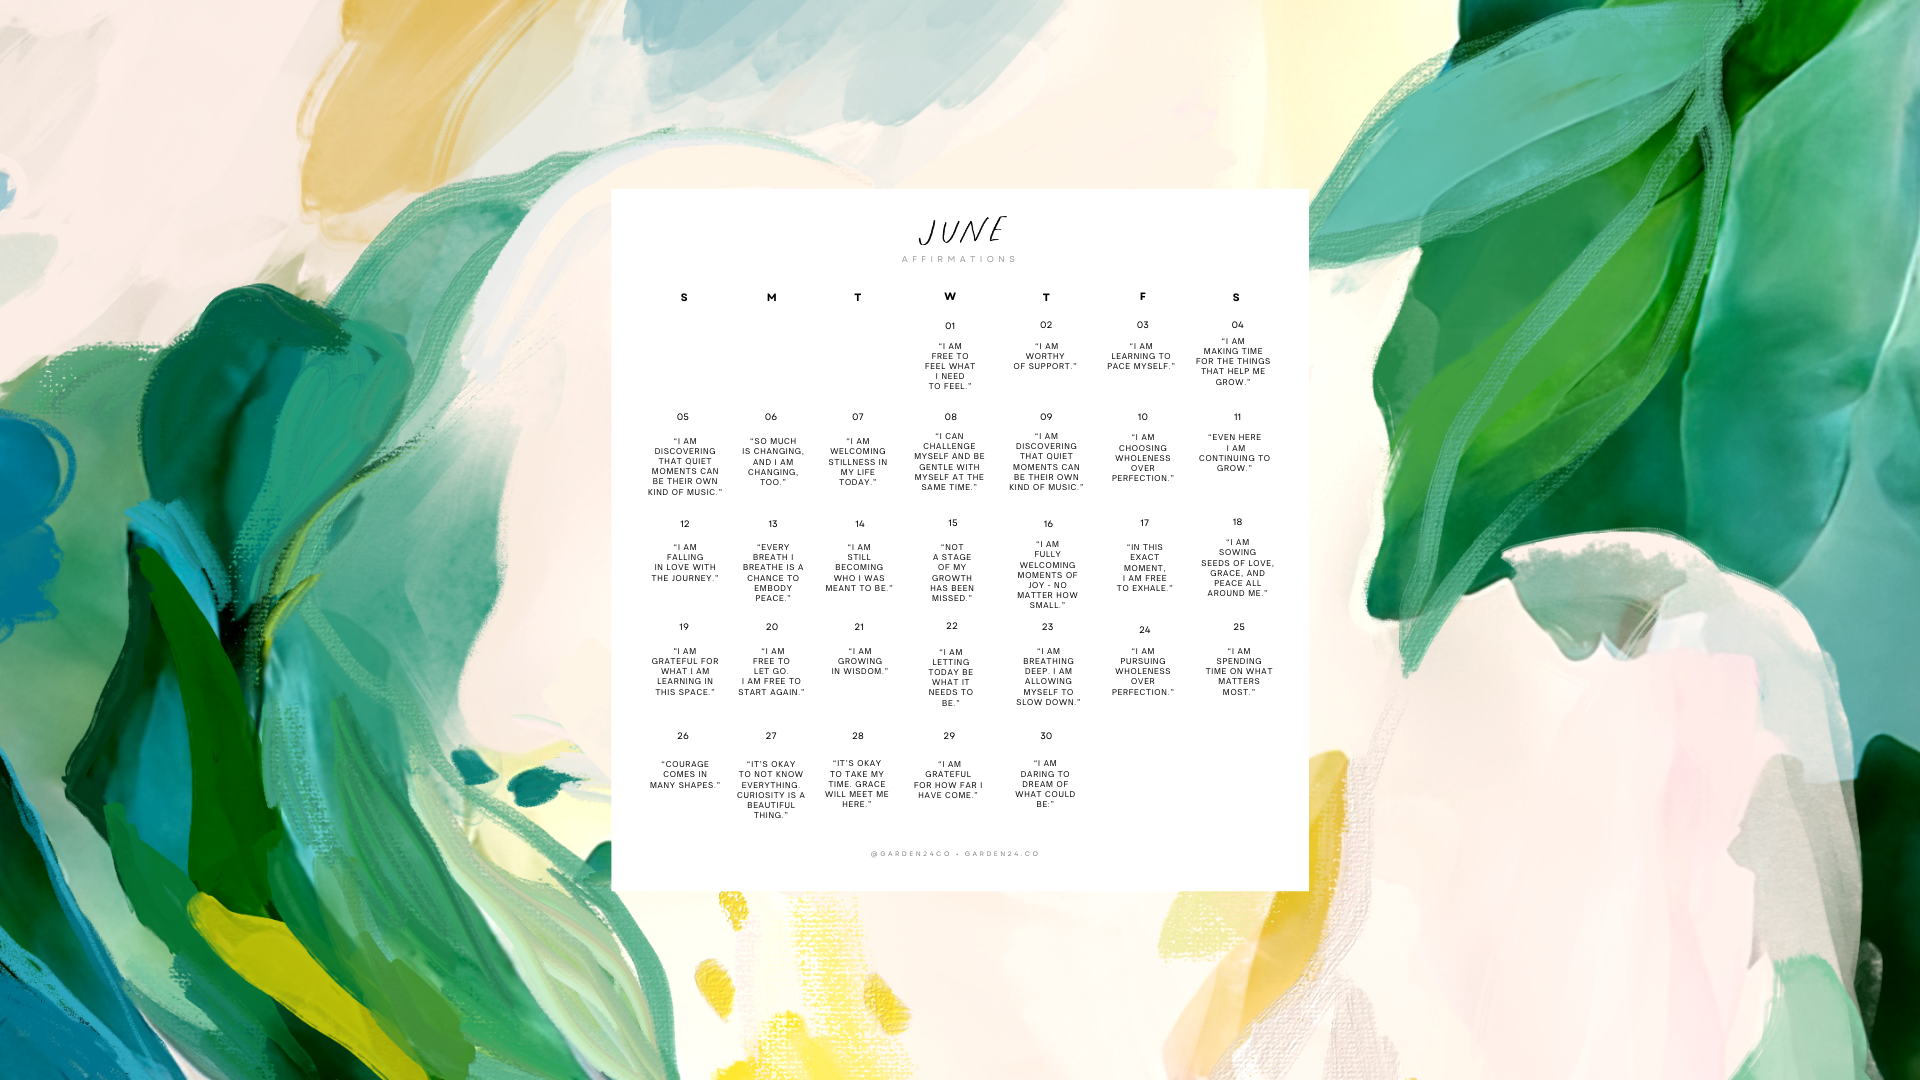 Free July 2022 Desktop Calendar Backgrounds  Nikkis Plate